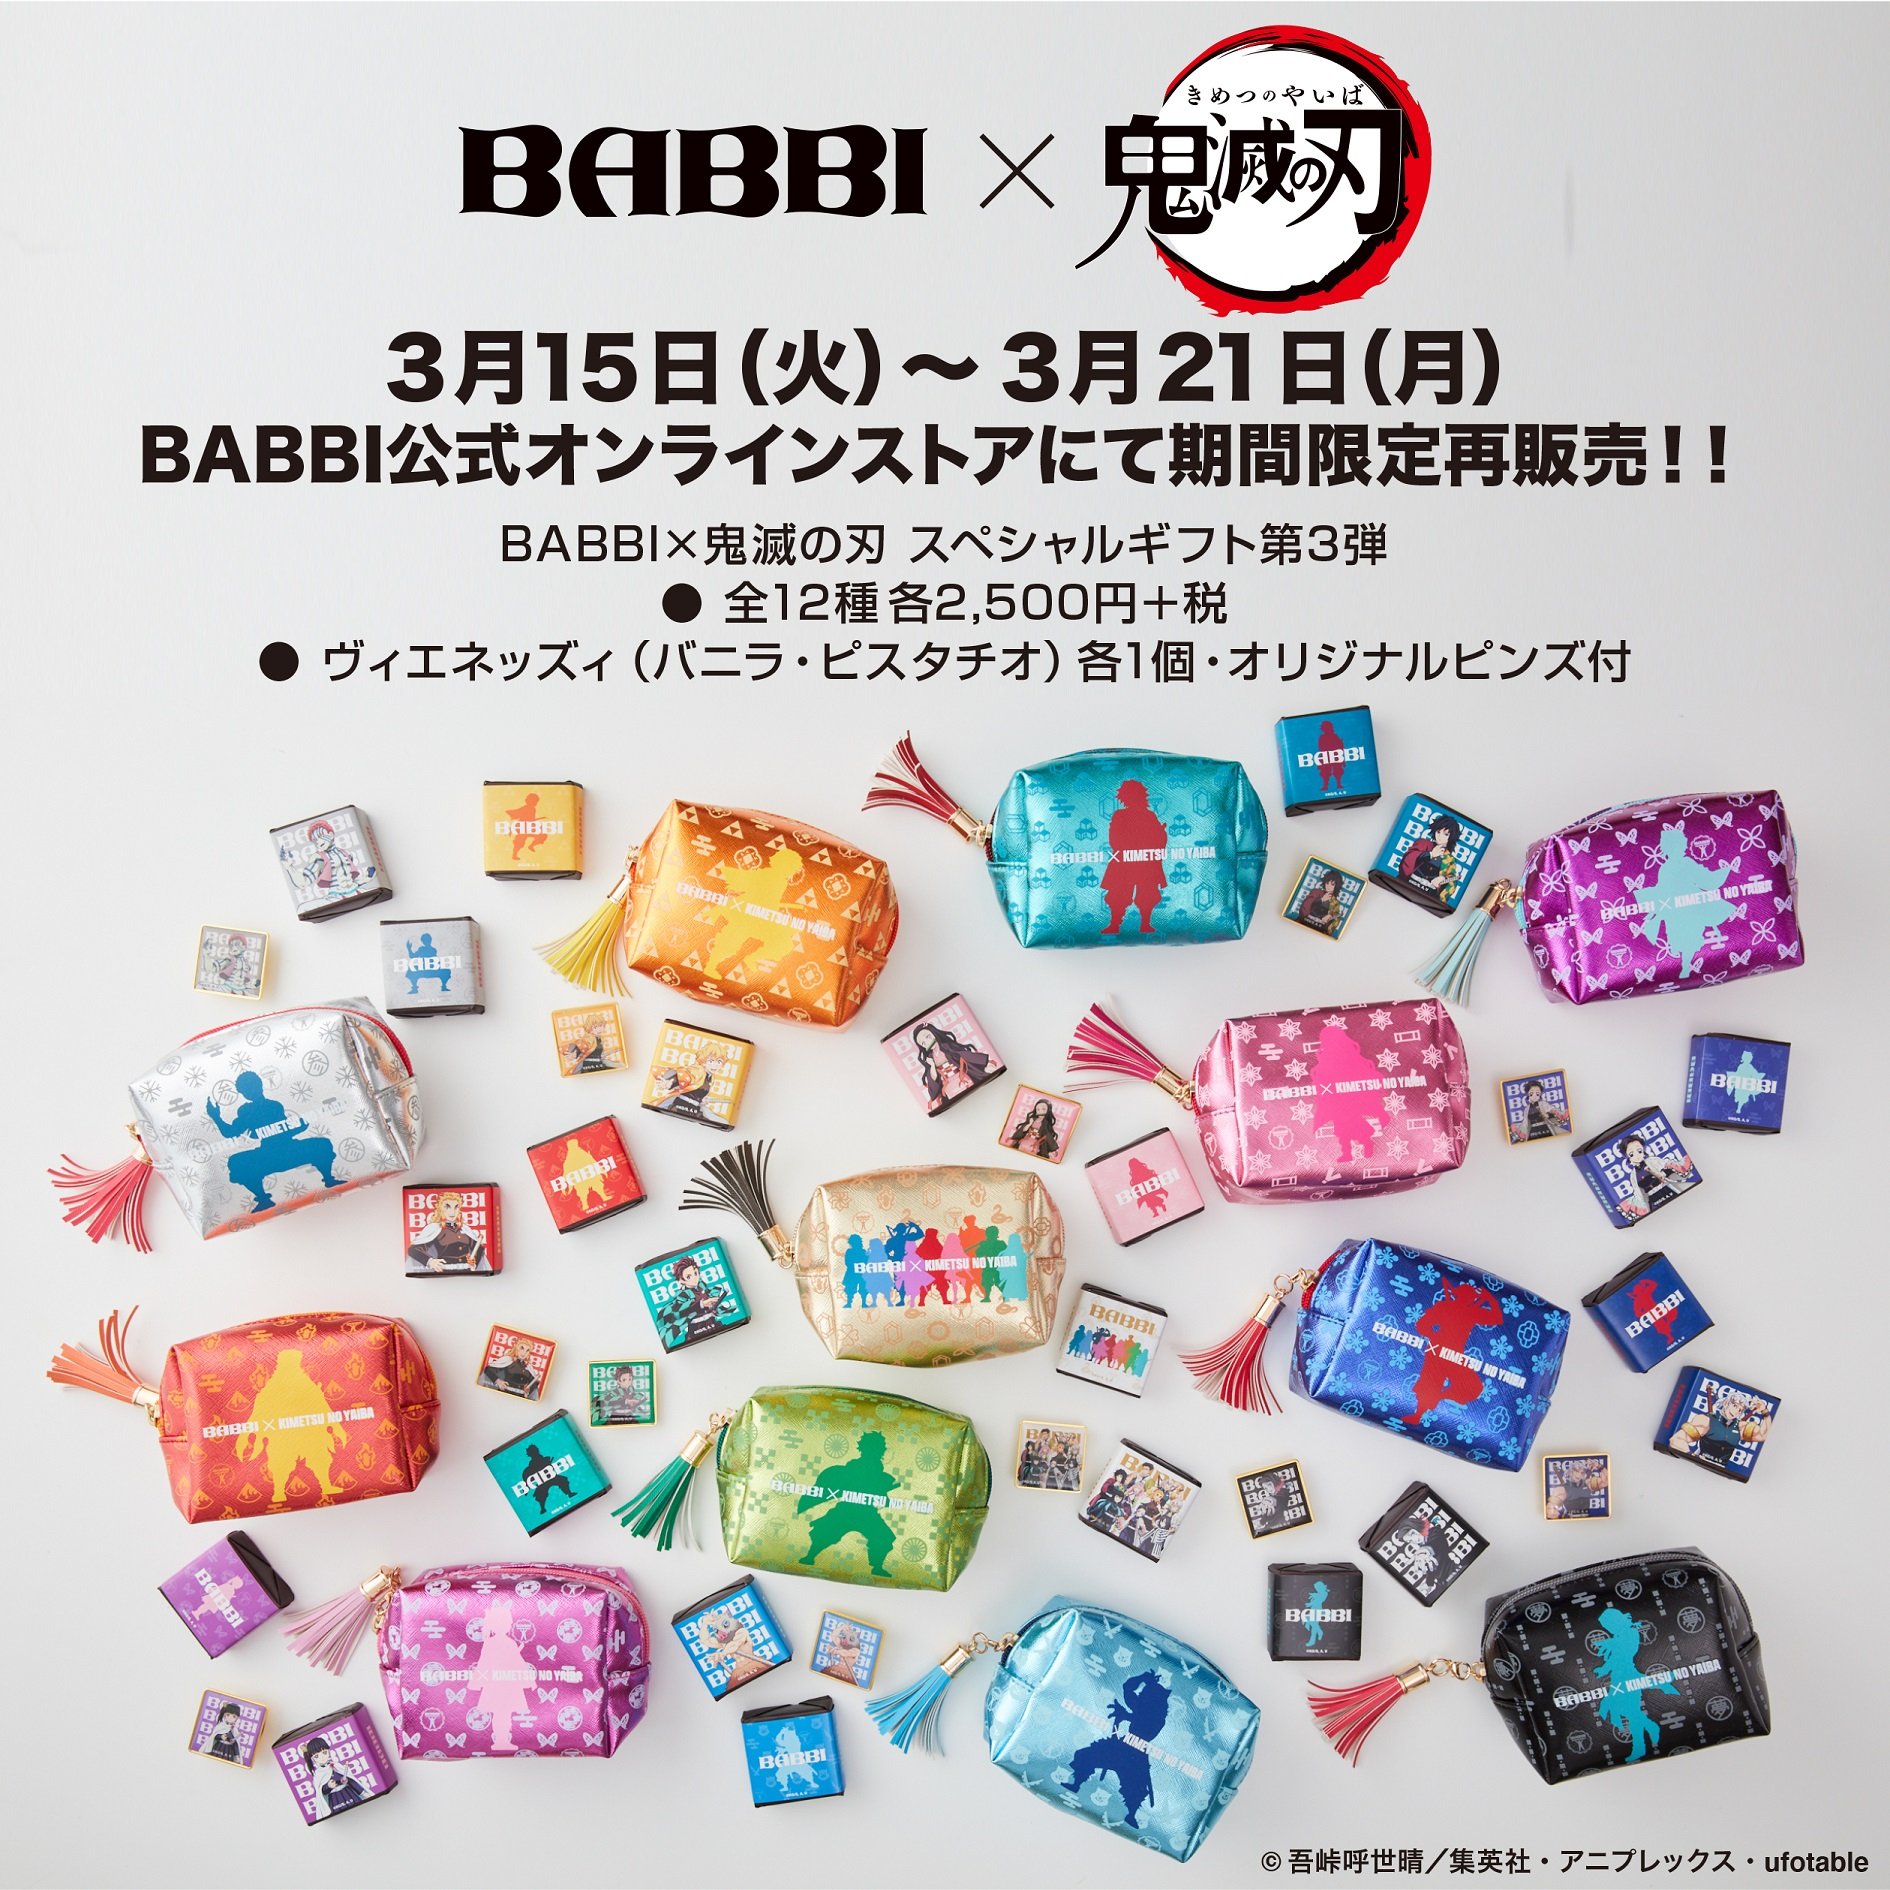 「BABBI×鬼滅の刃 スペシャルギフト」第3弾、BABBI Online Store 